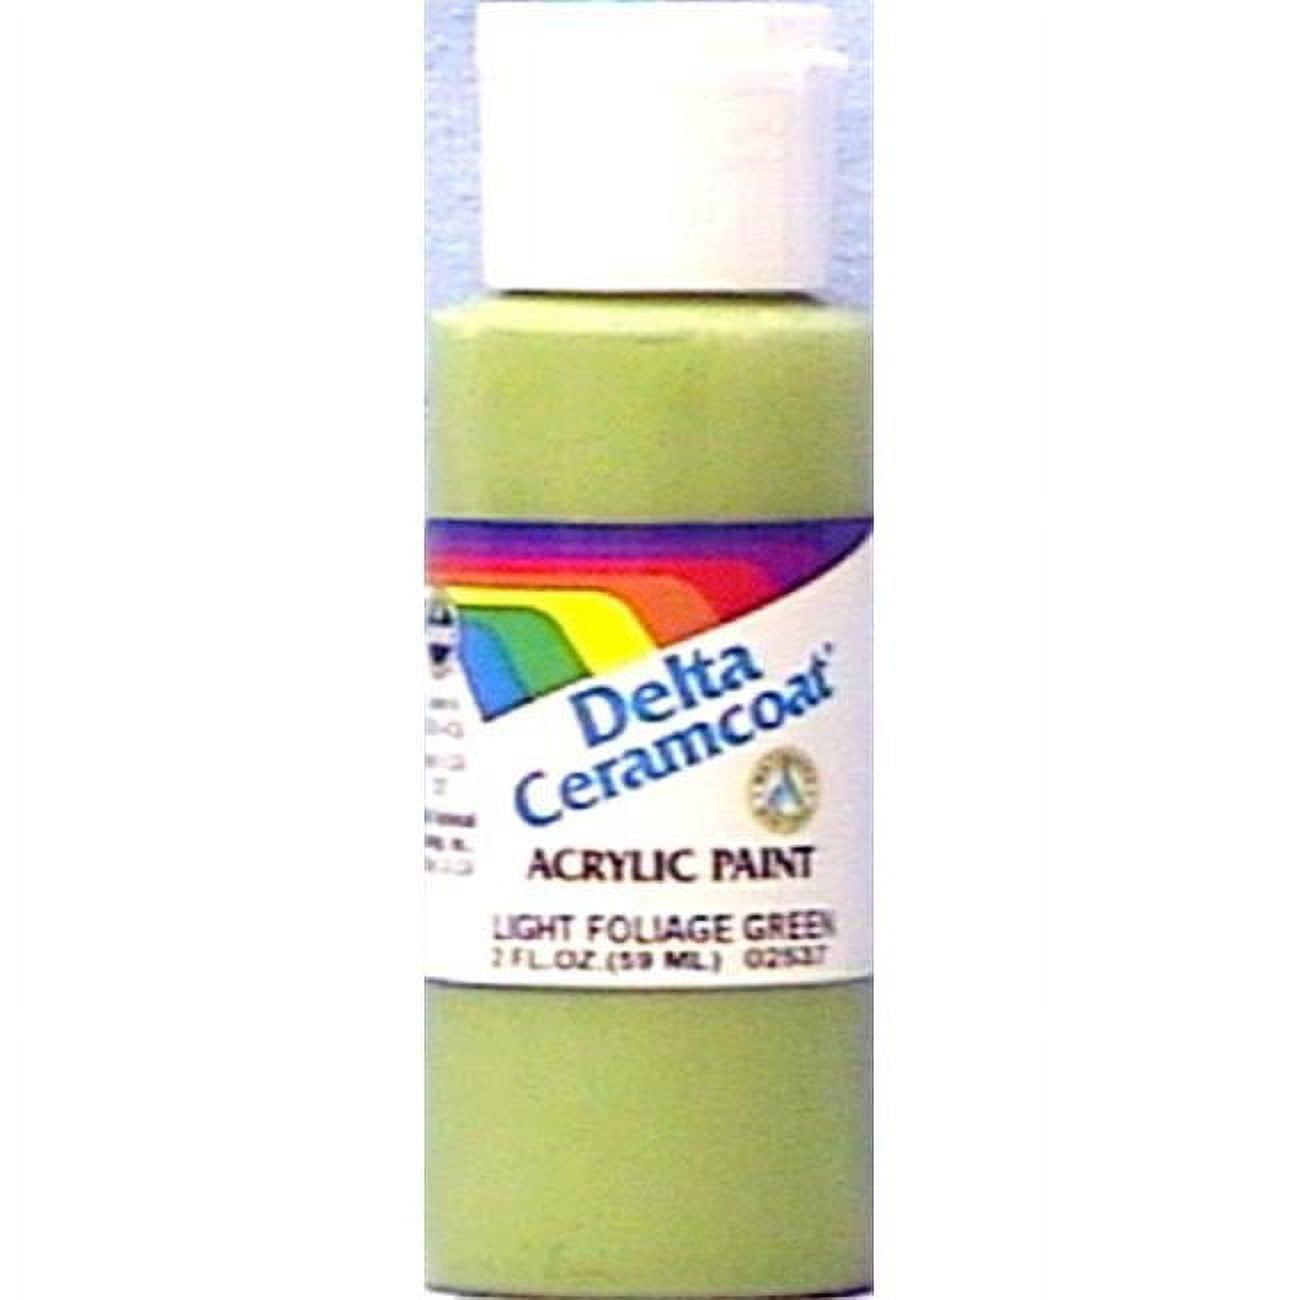 Delta Ceramcoat Acrylic Paint 2oz-Light Foliage Green - Opaque